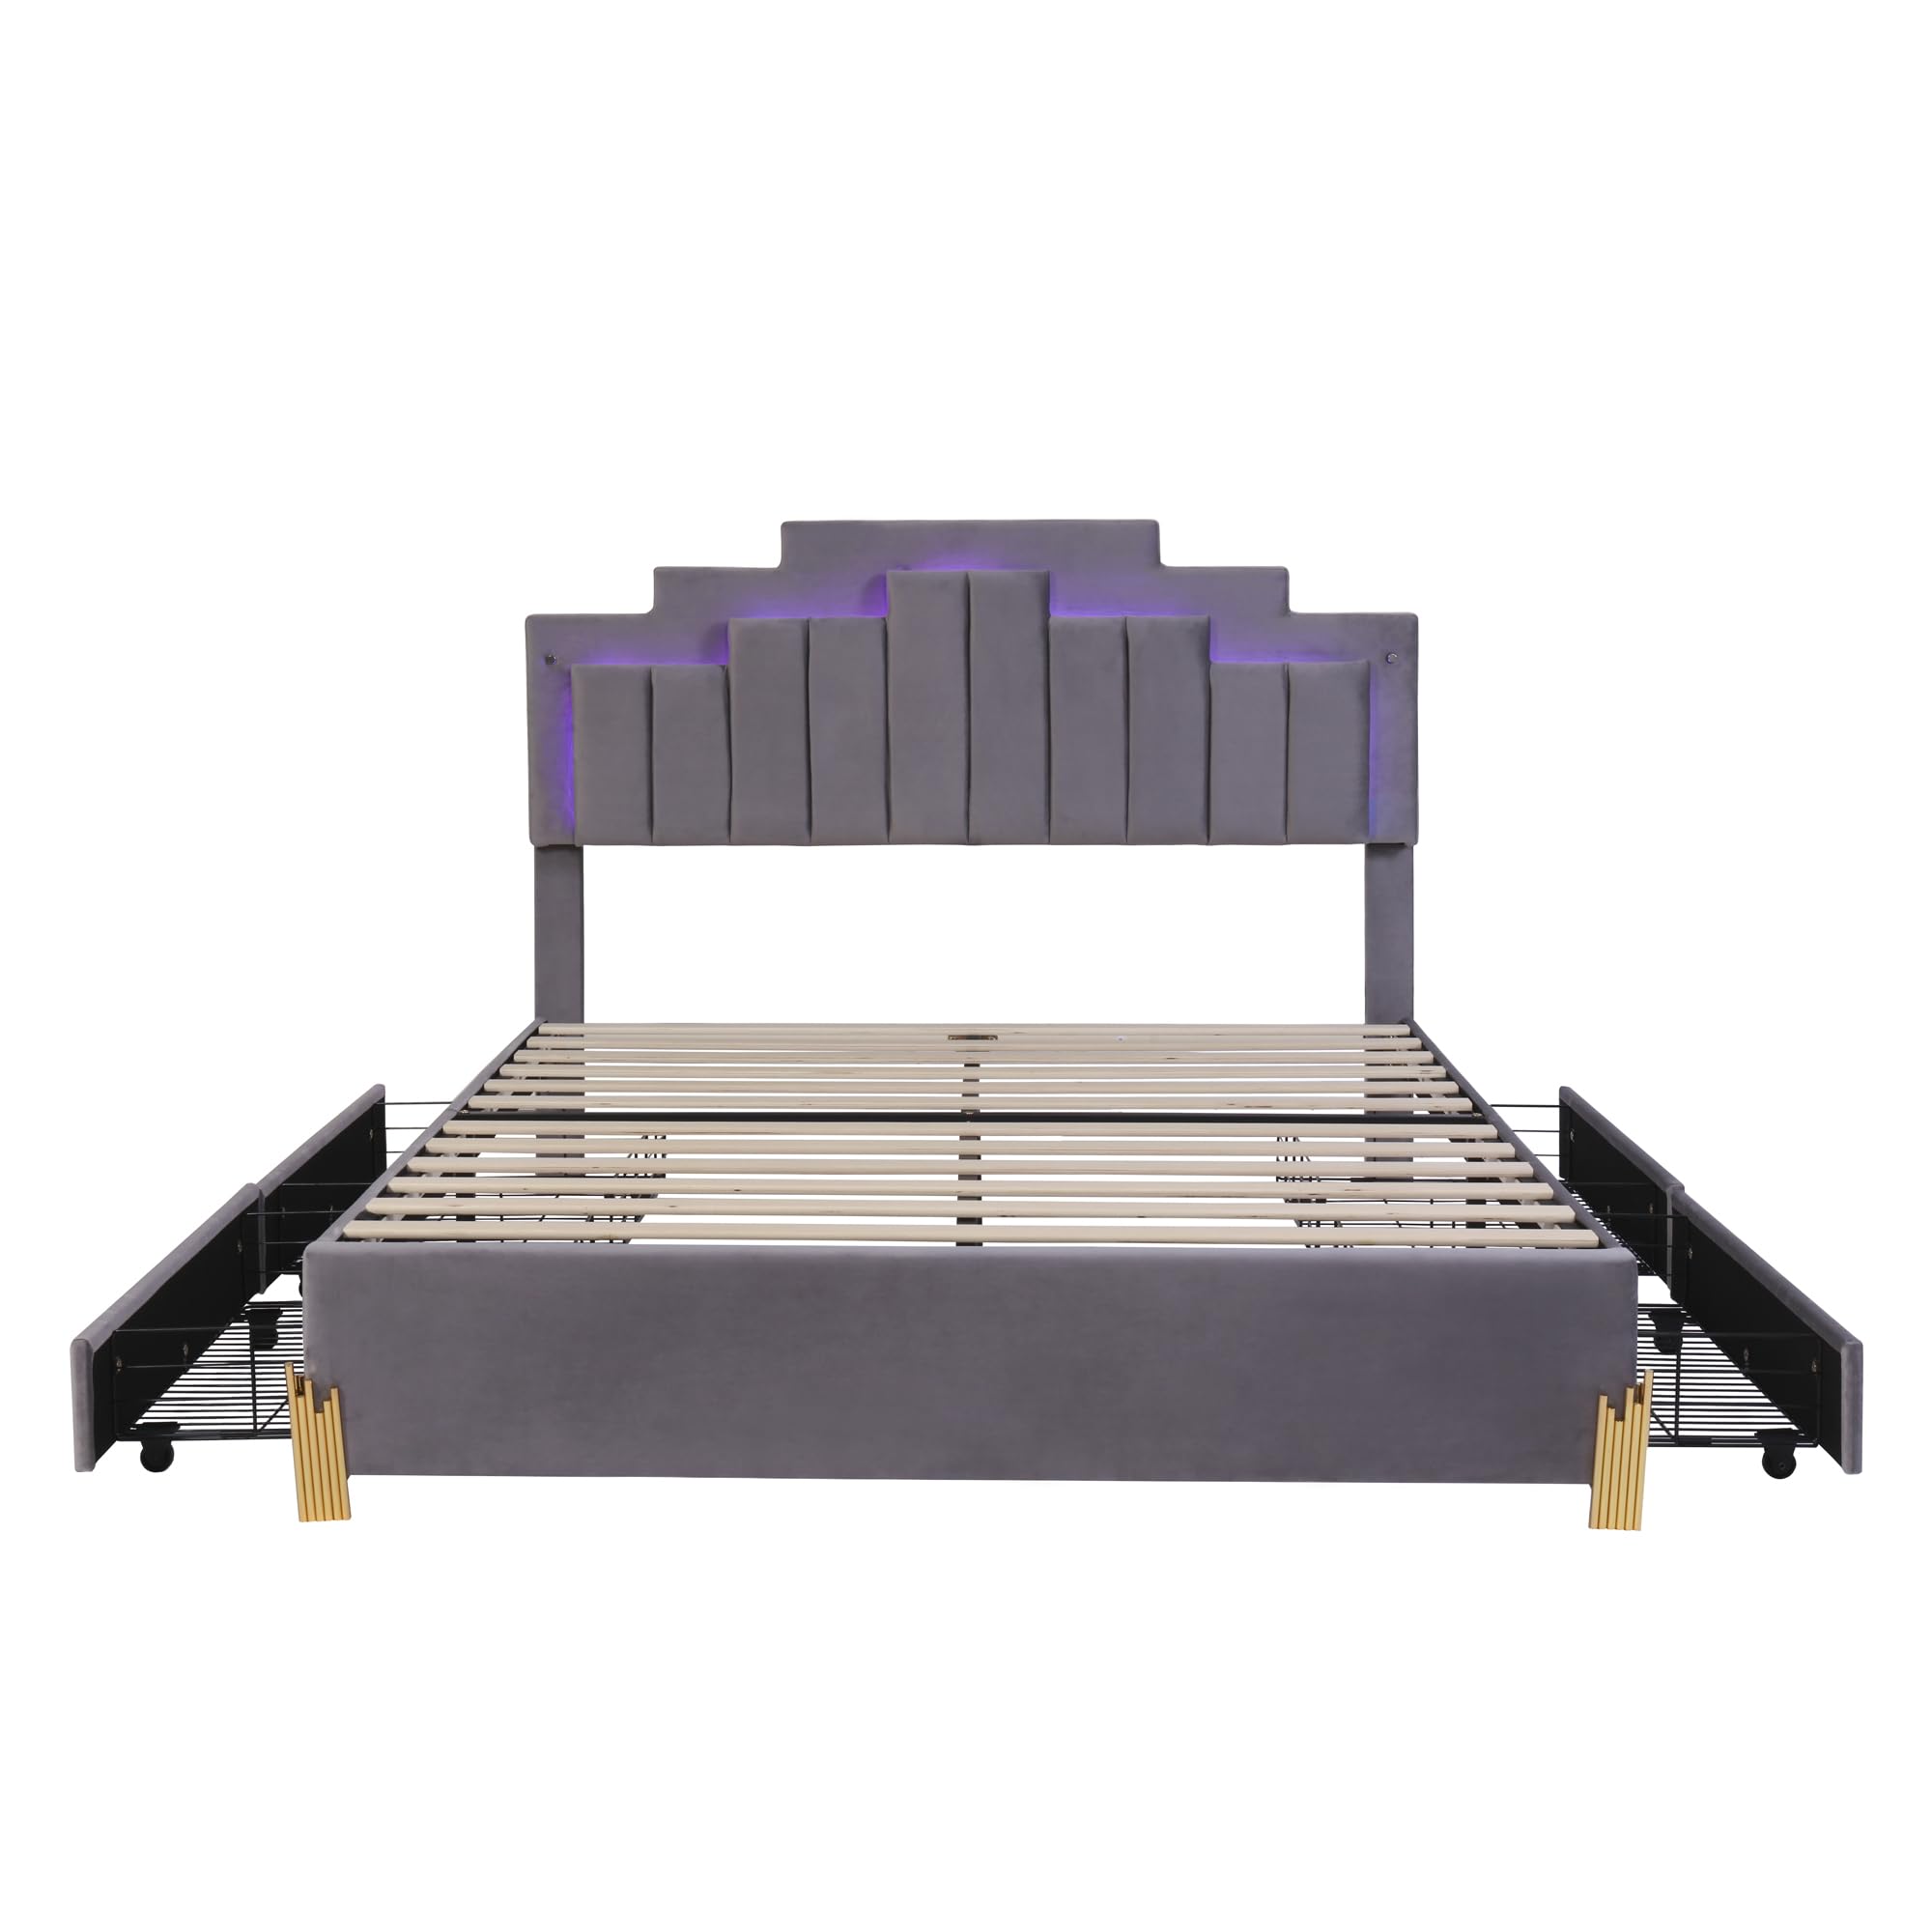 JIVOIT Queen Size Upholstered Platform Bed with 4 Drawers, Modern LED Light Platform Bed Frame, Stylish Irregular Metal Bed Legs Design, Upholstered Storage Bed for Kids Teens (Gray,Queen,Metal Legs)